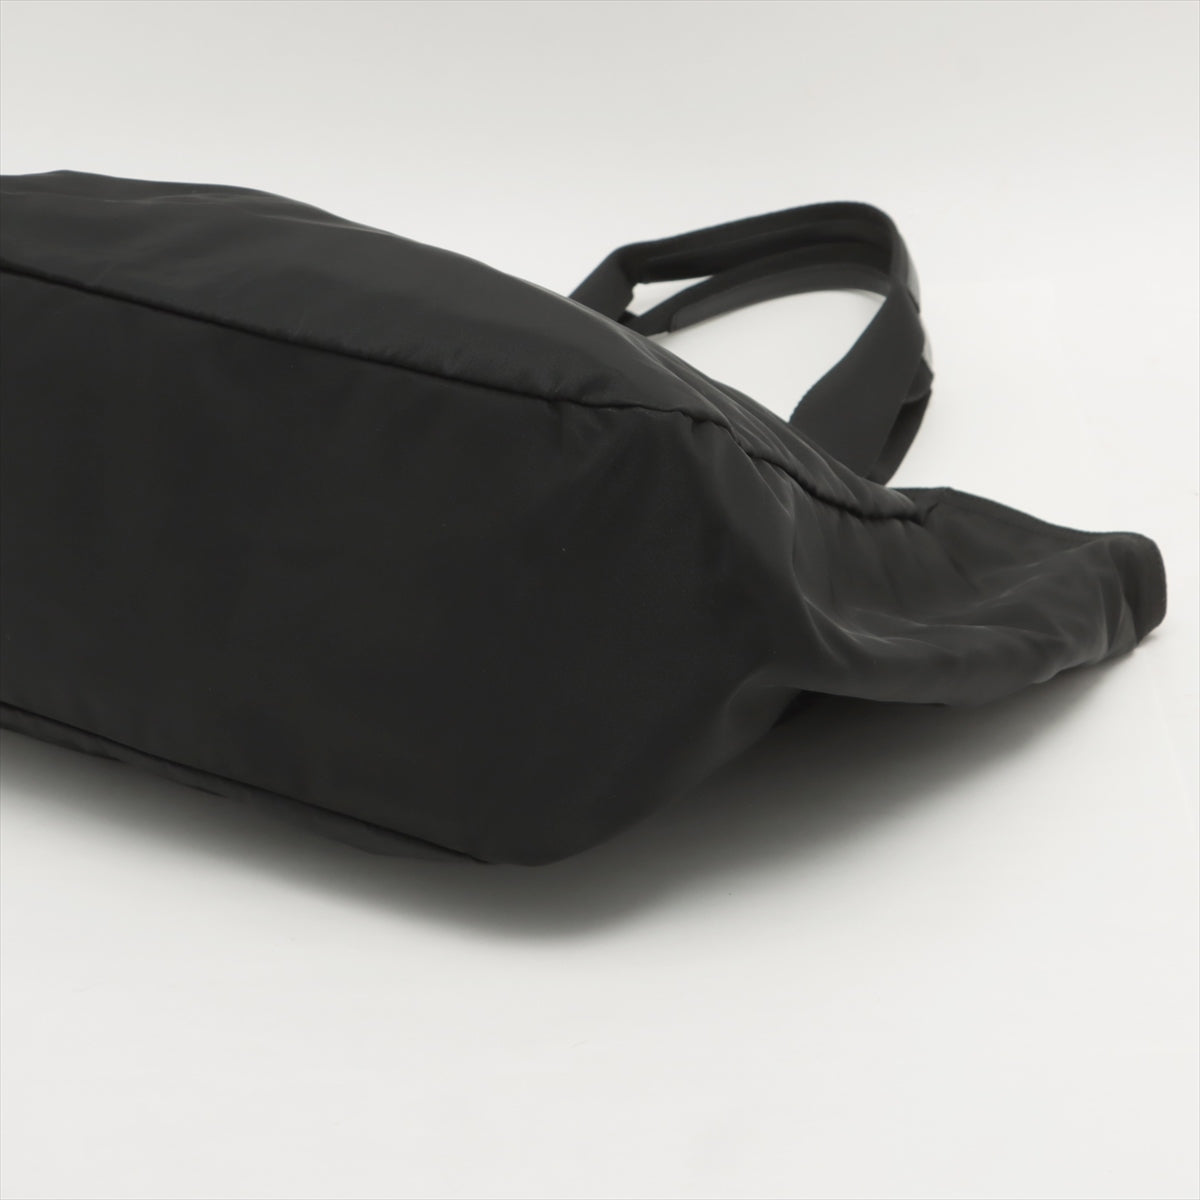 Prada Tessuto Nylon 2way handbag Black